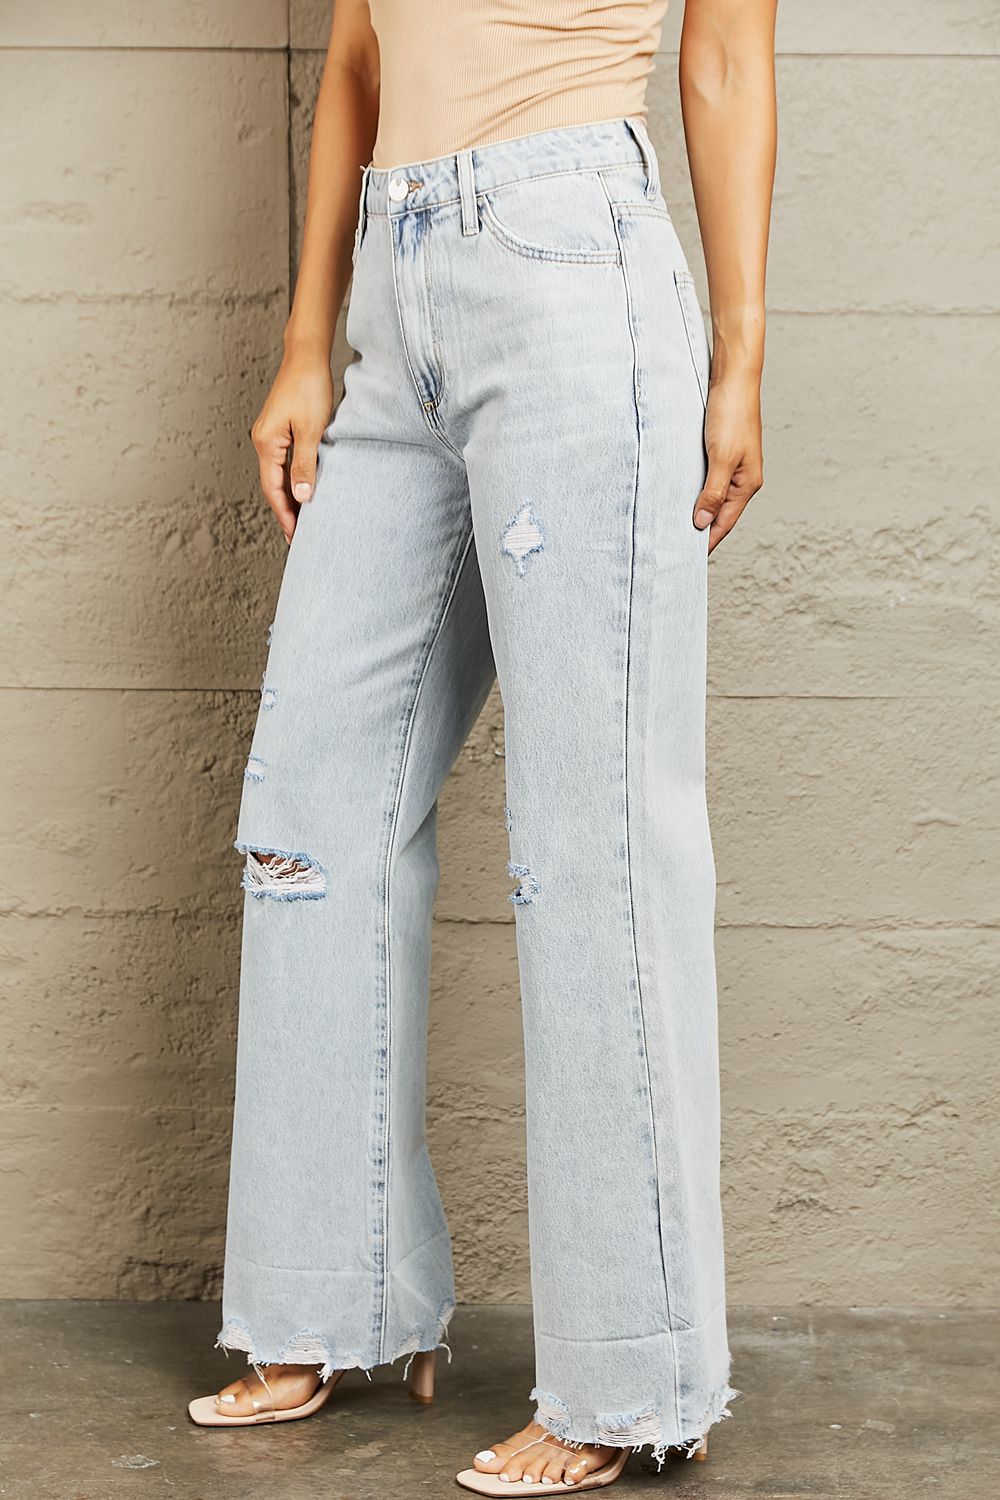 Jacqueline - BAYEAS High Waist Flare Jeans